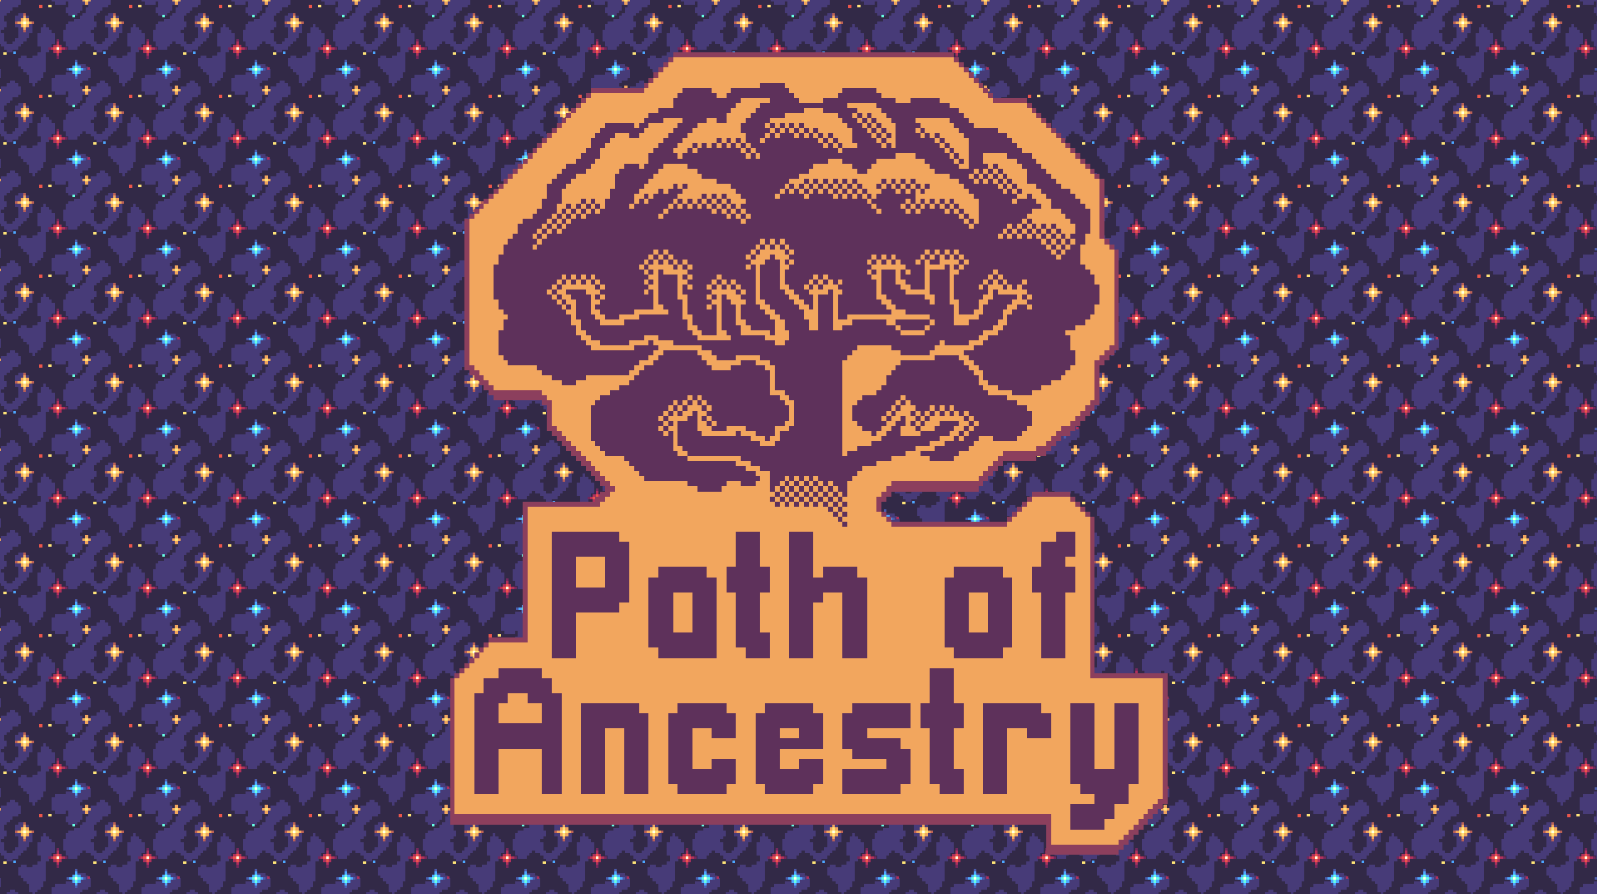 Path of Ancestry